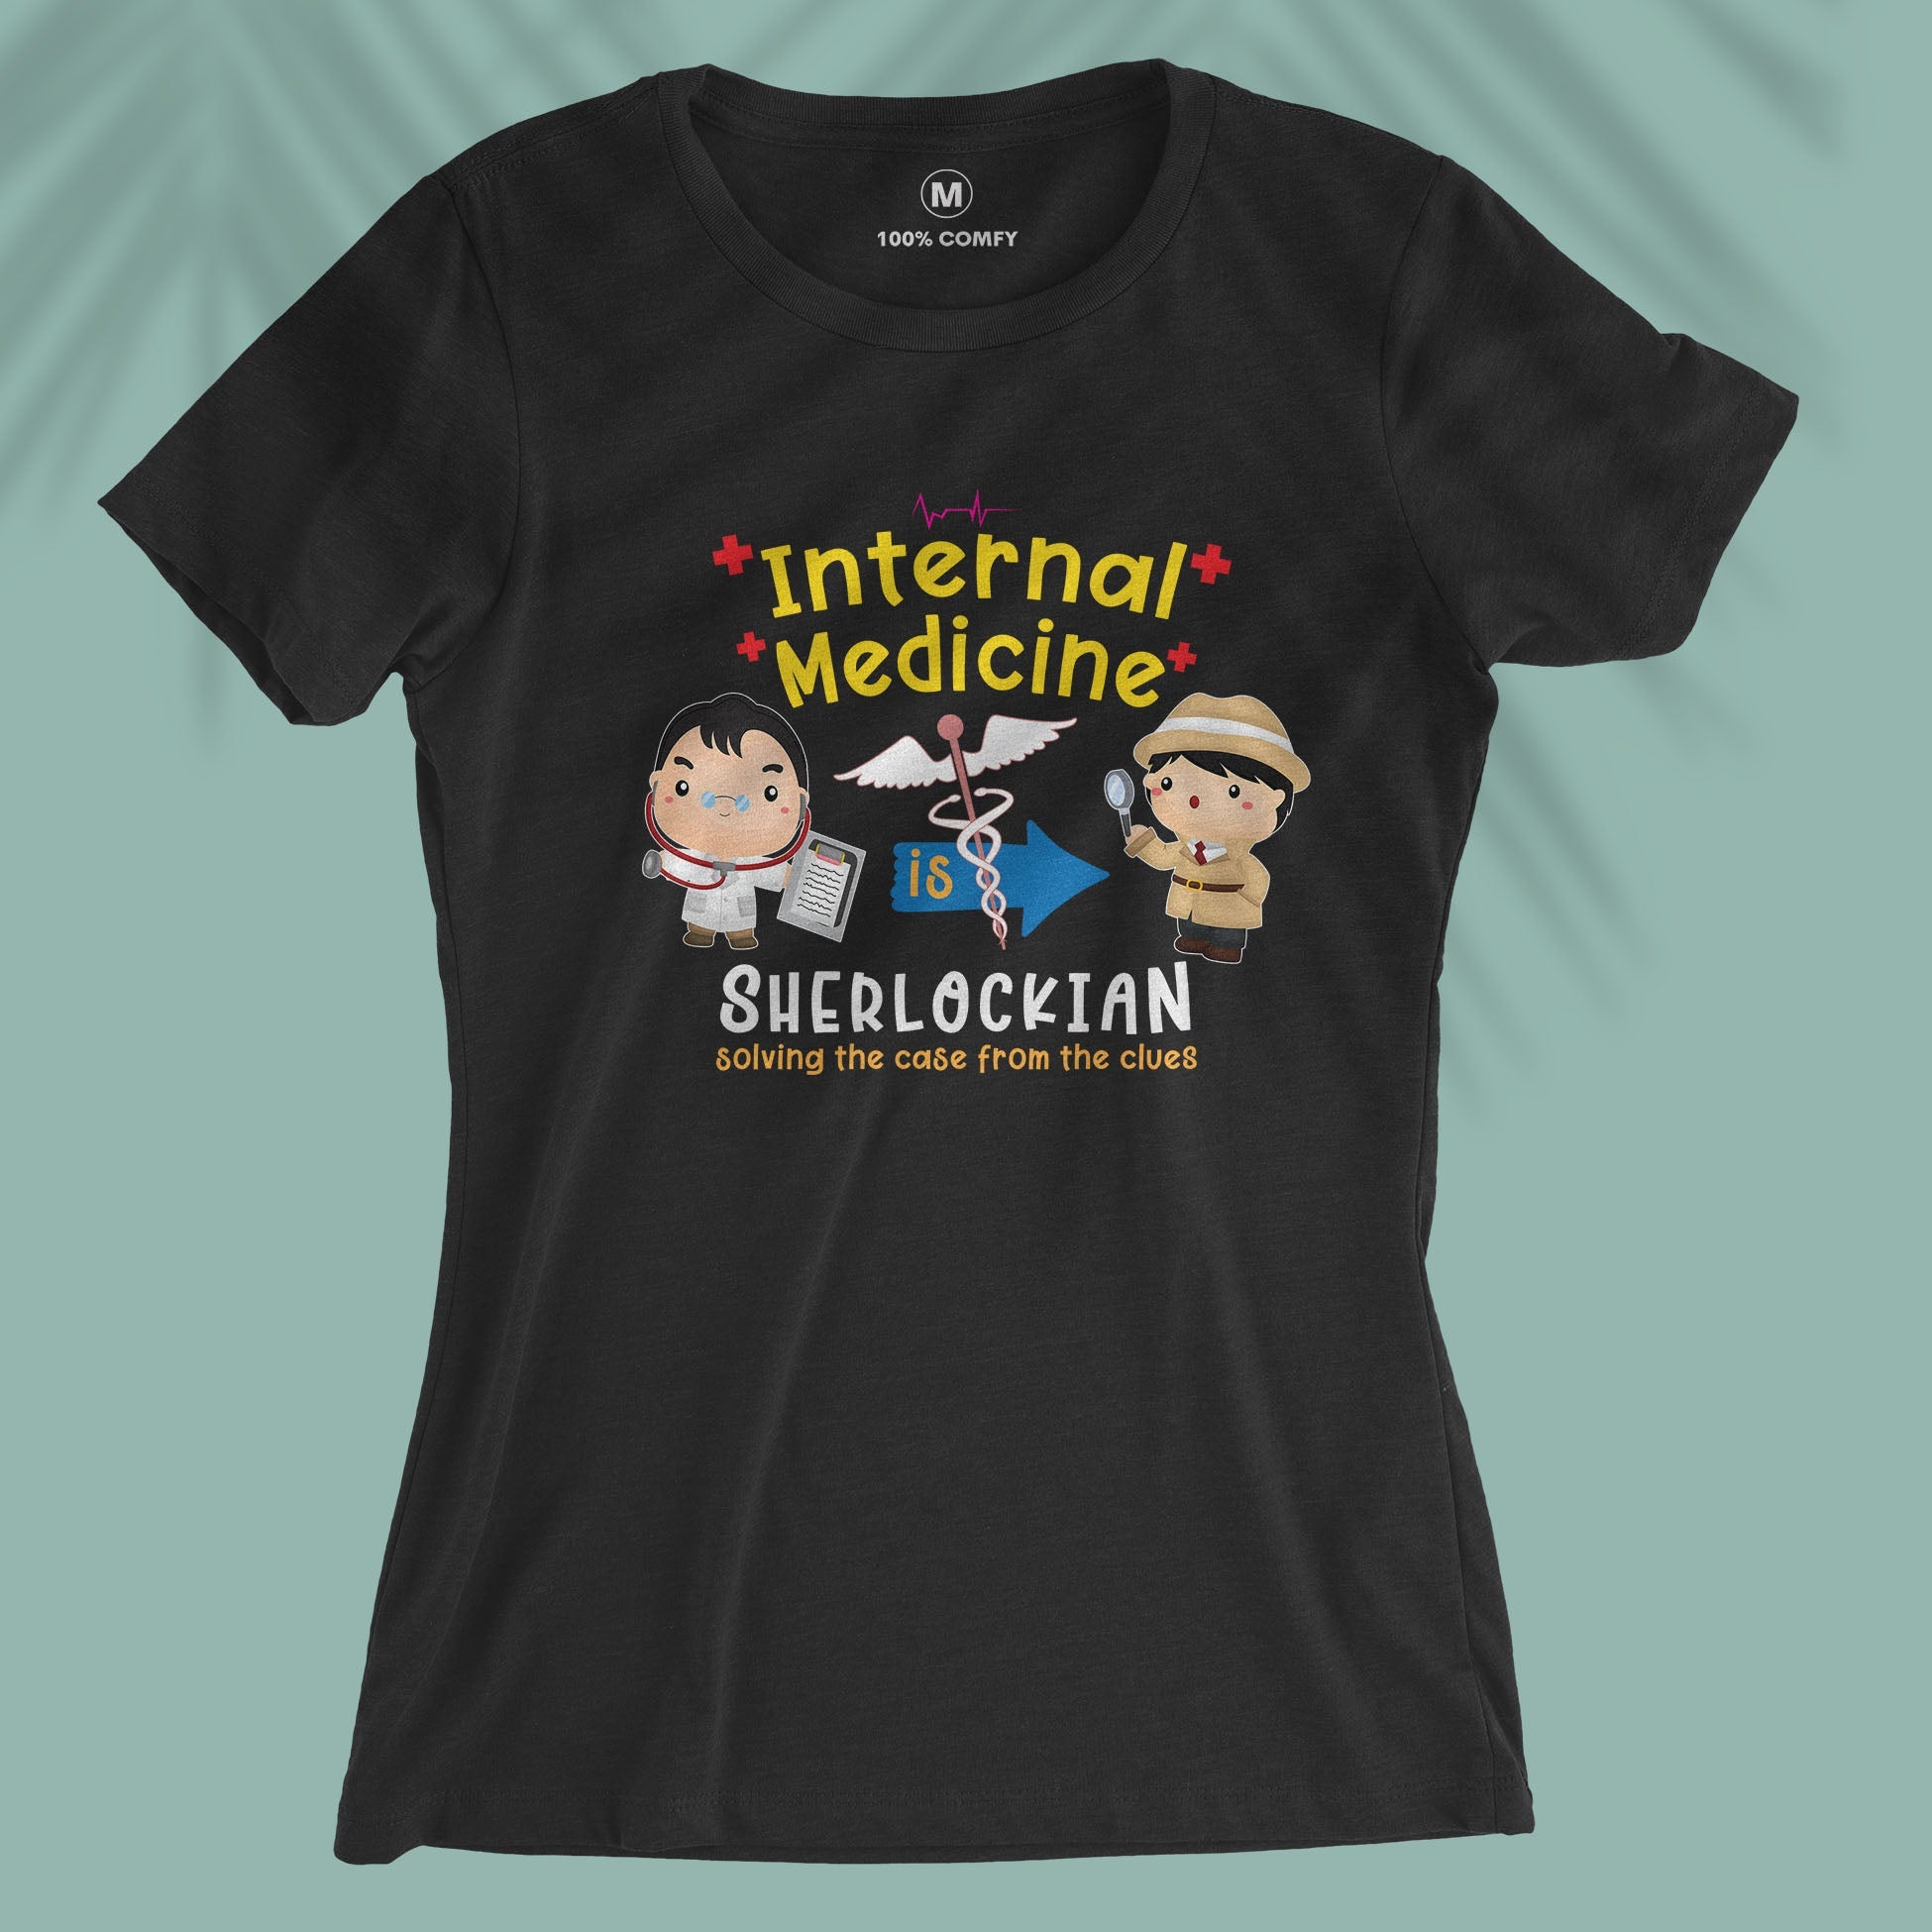 Internal Medicine is Sherlockian - Women T-shirt